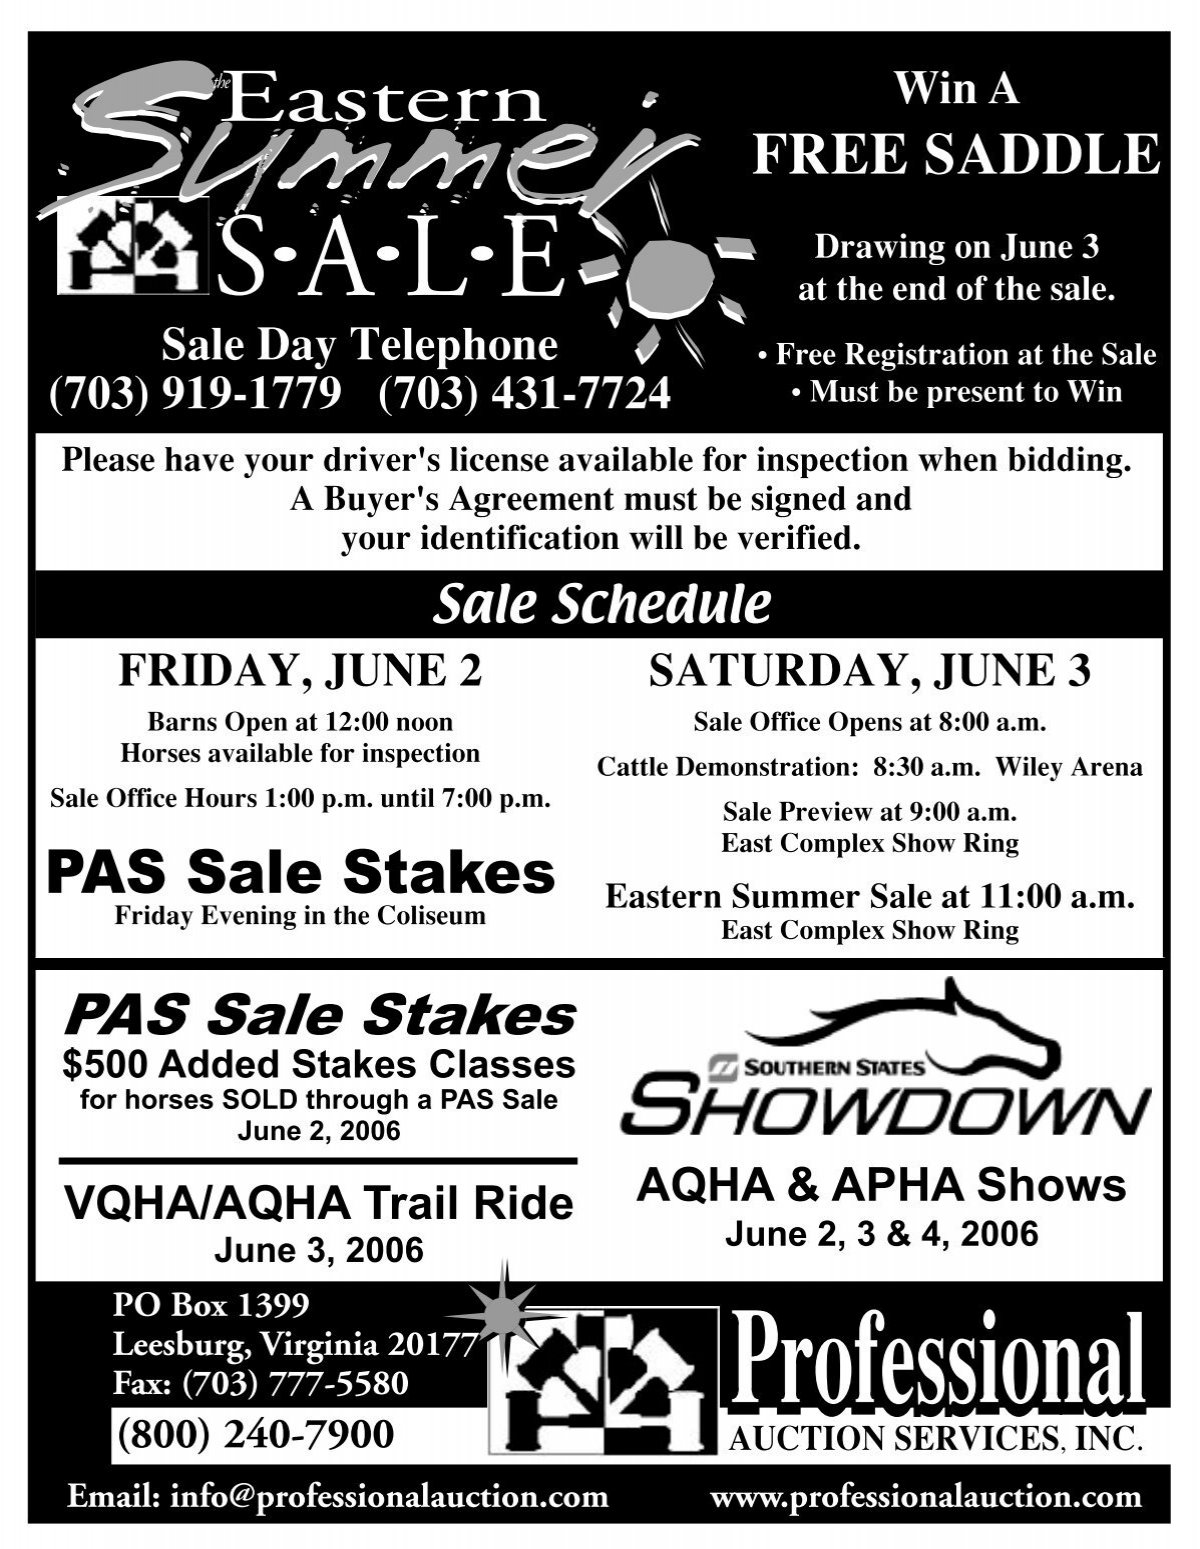 free saddle - Professional Auction Services, Inc.